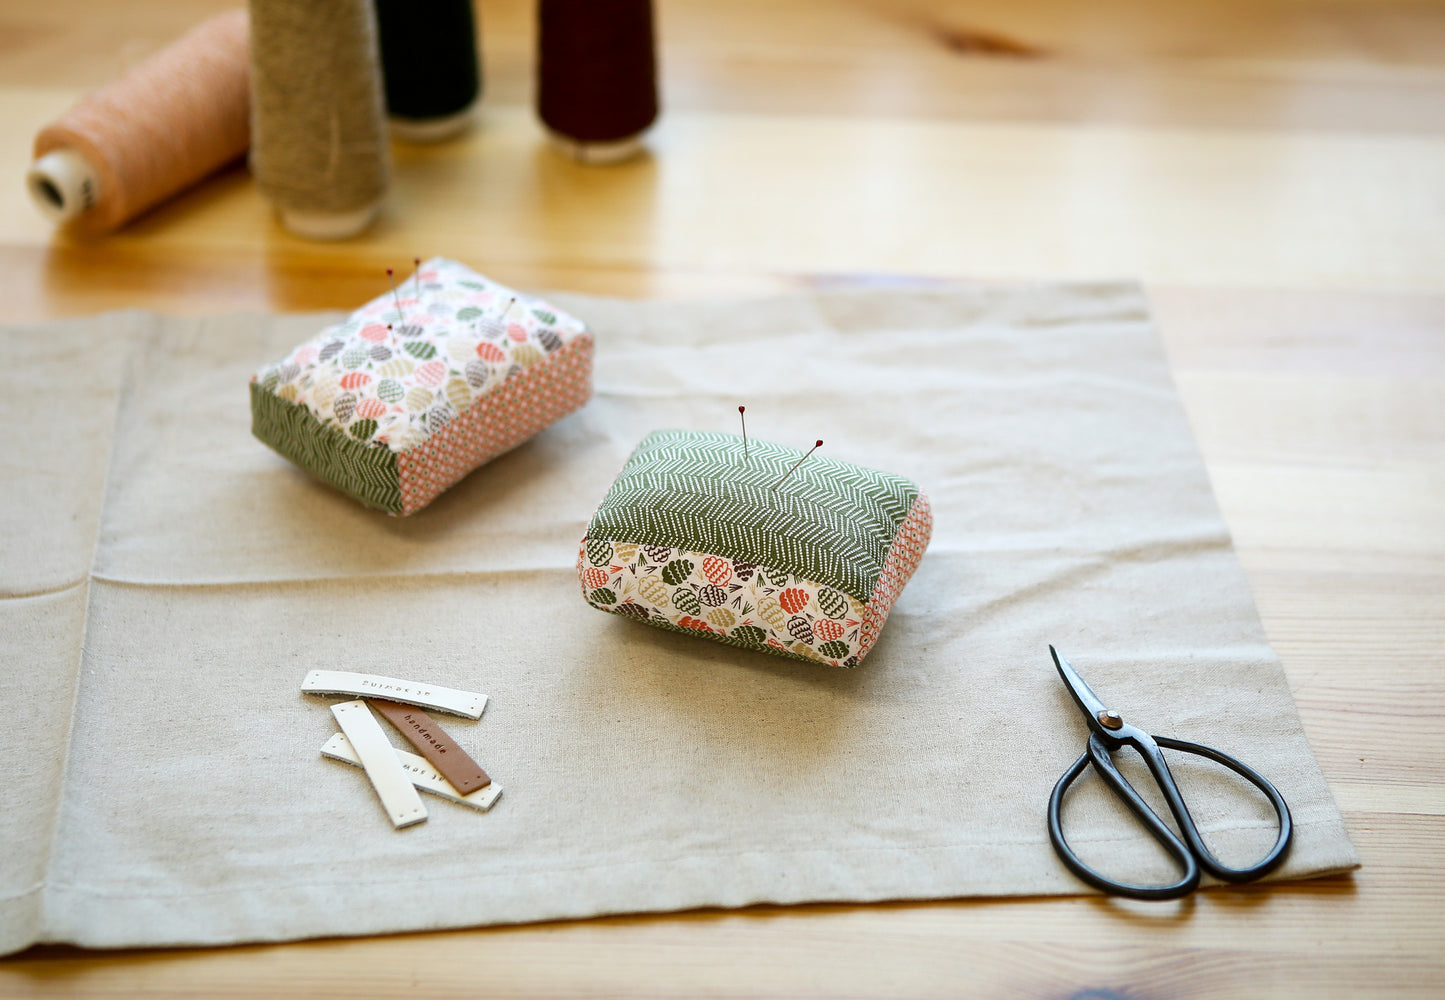 Quarter Fabric Pack - Cotton, Dailylike "Pine" - KEY Handmade
 - 6